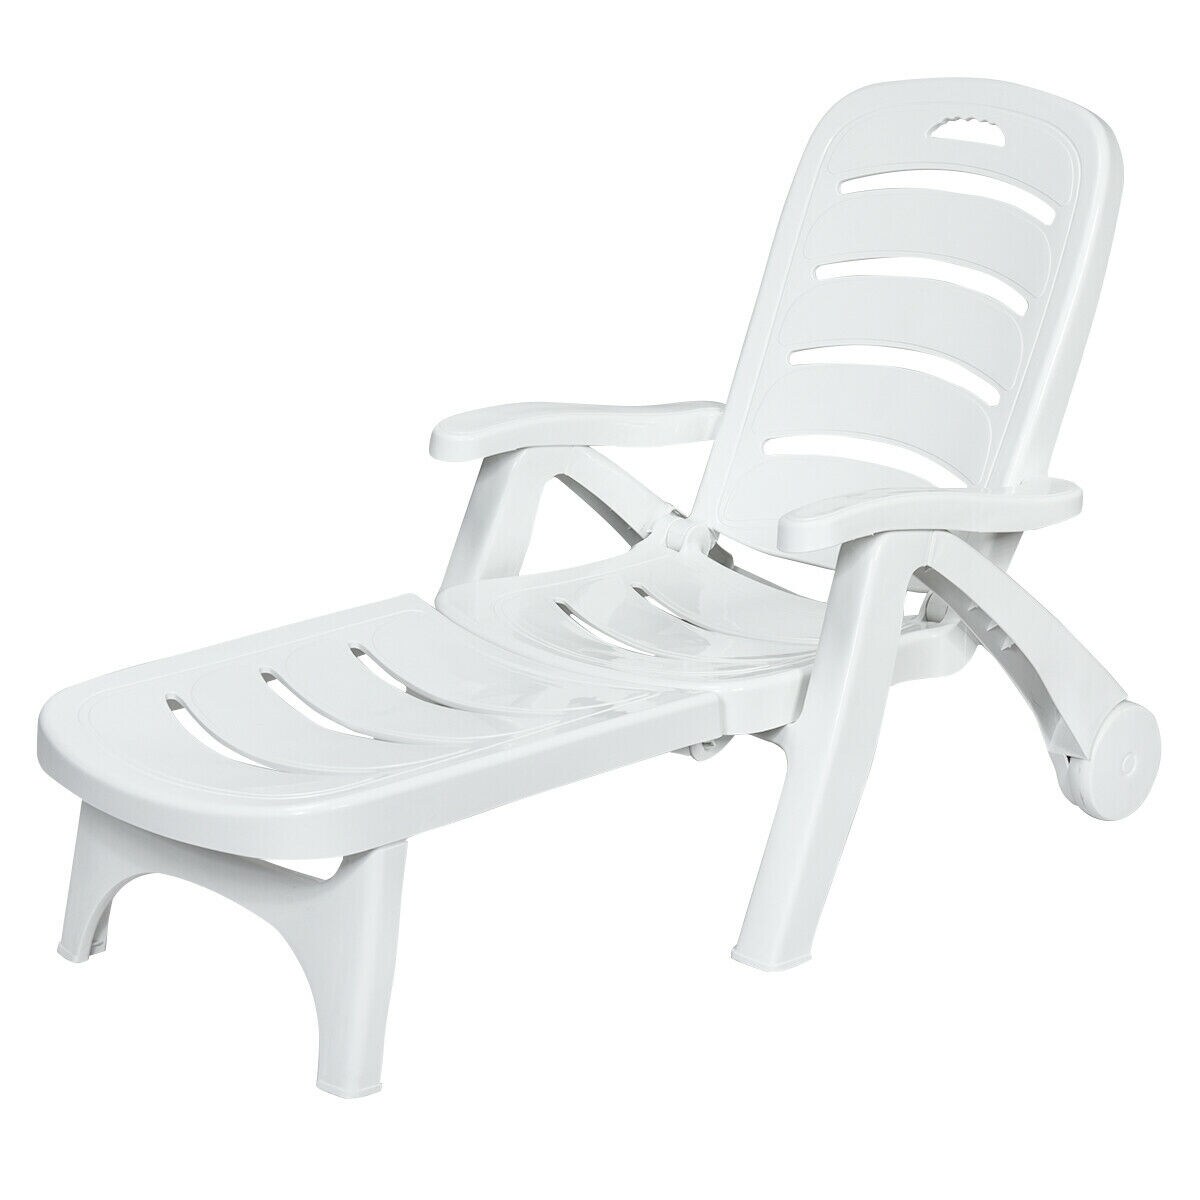 CASAINC Patio chair White Plastic Frame Stationary Chaise Lounge Chair ...